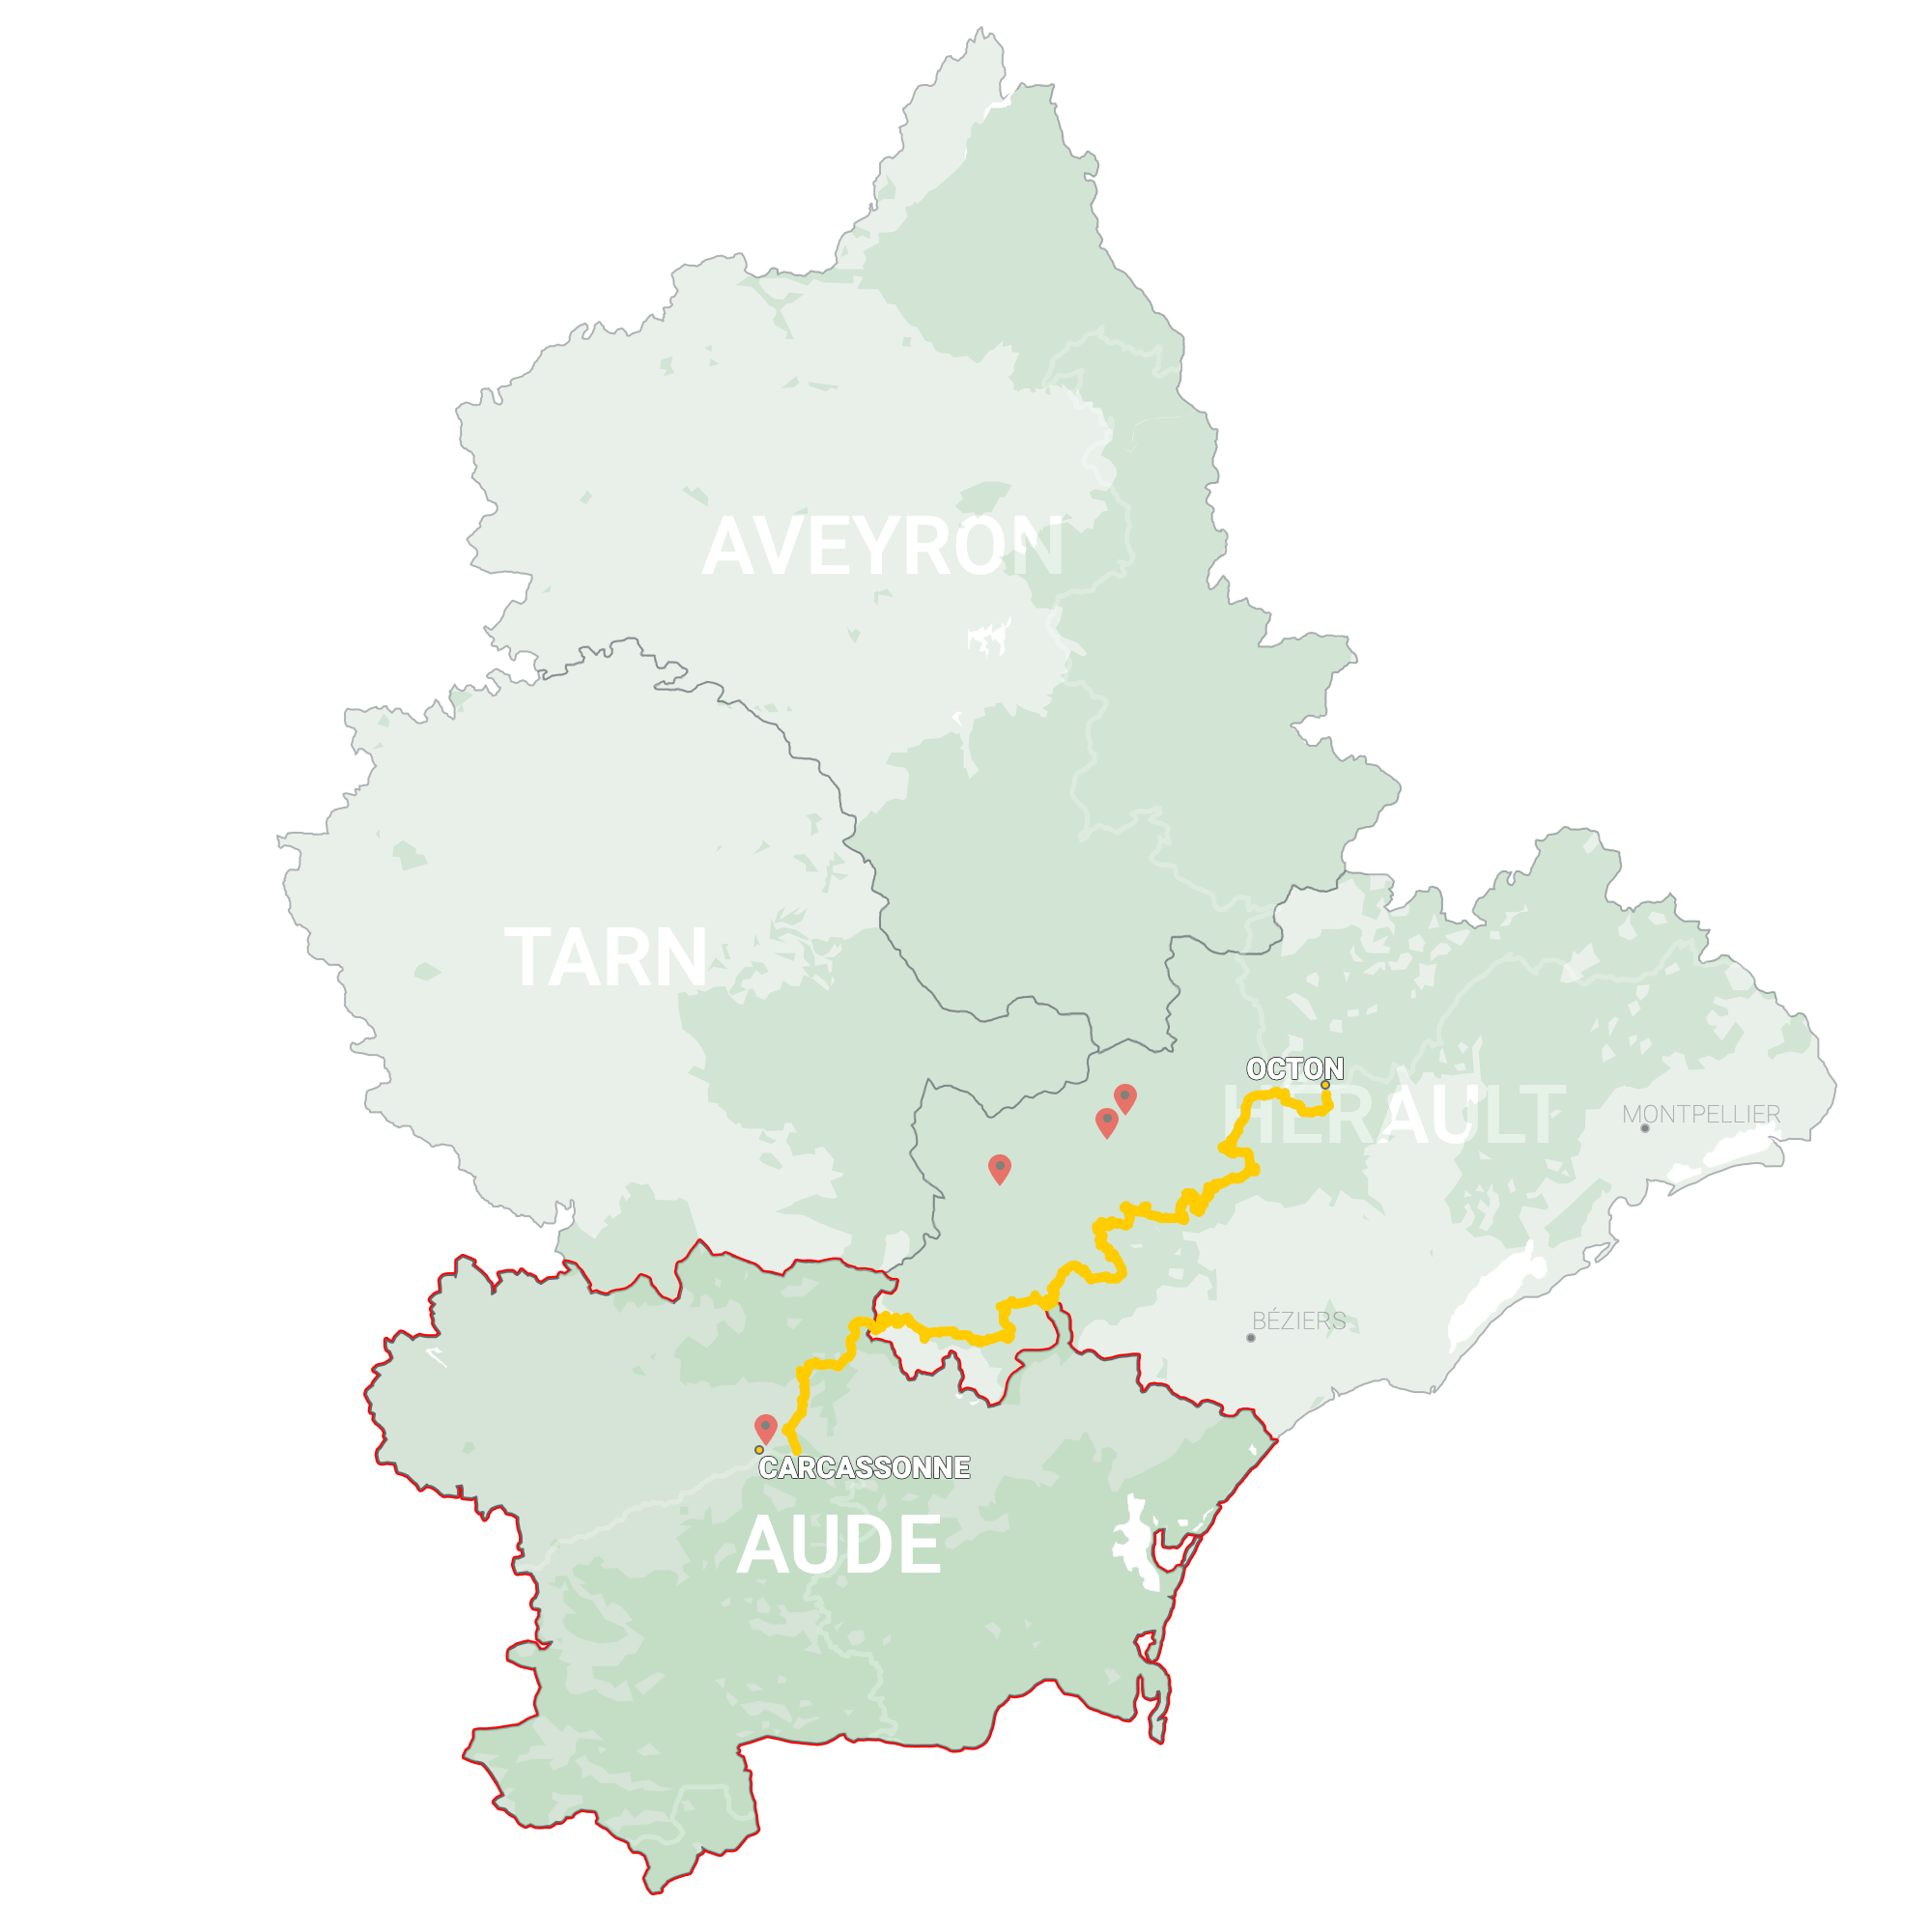 GLR 12 Region Aude Map Overview